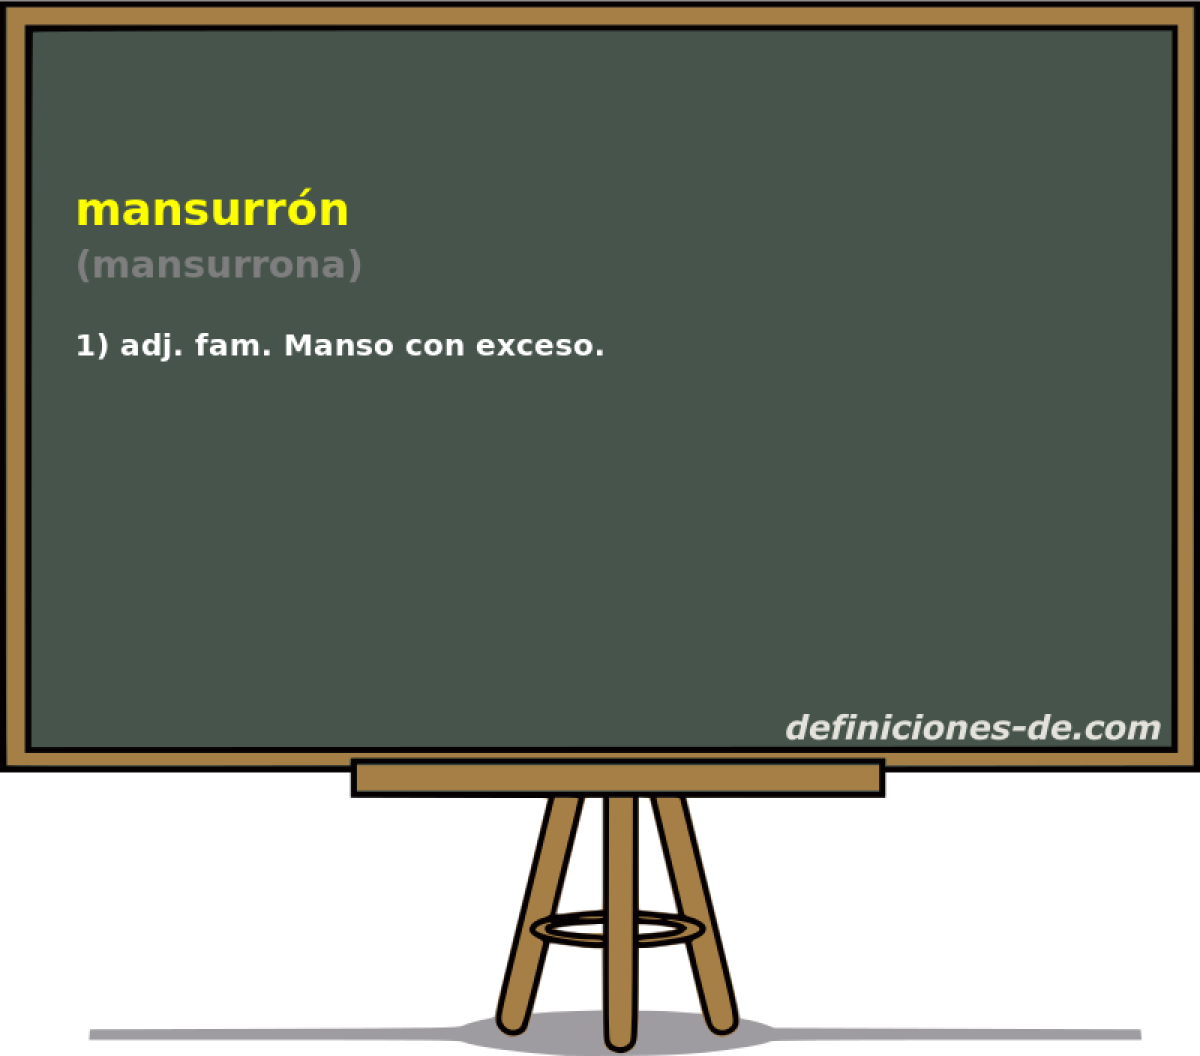 mansurrn (mansurrona)